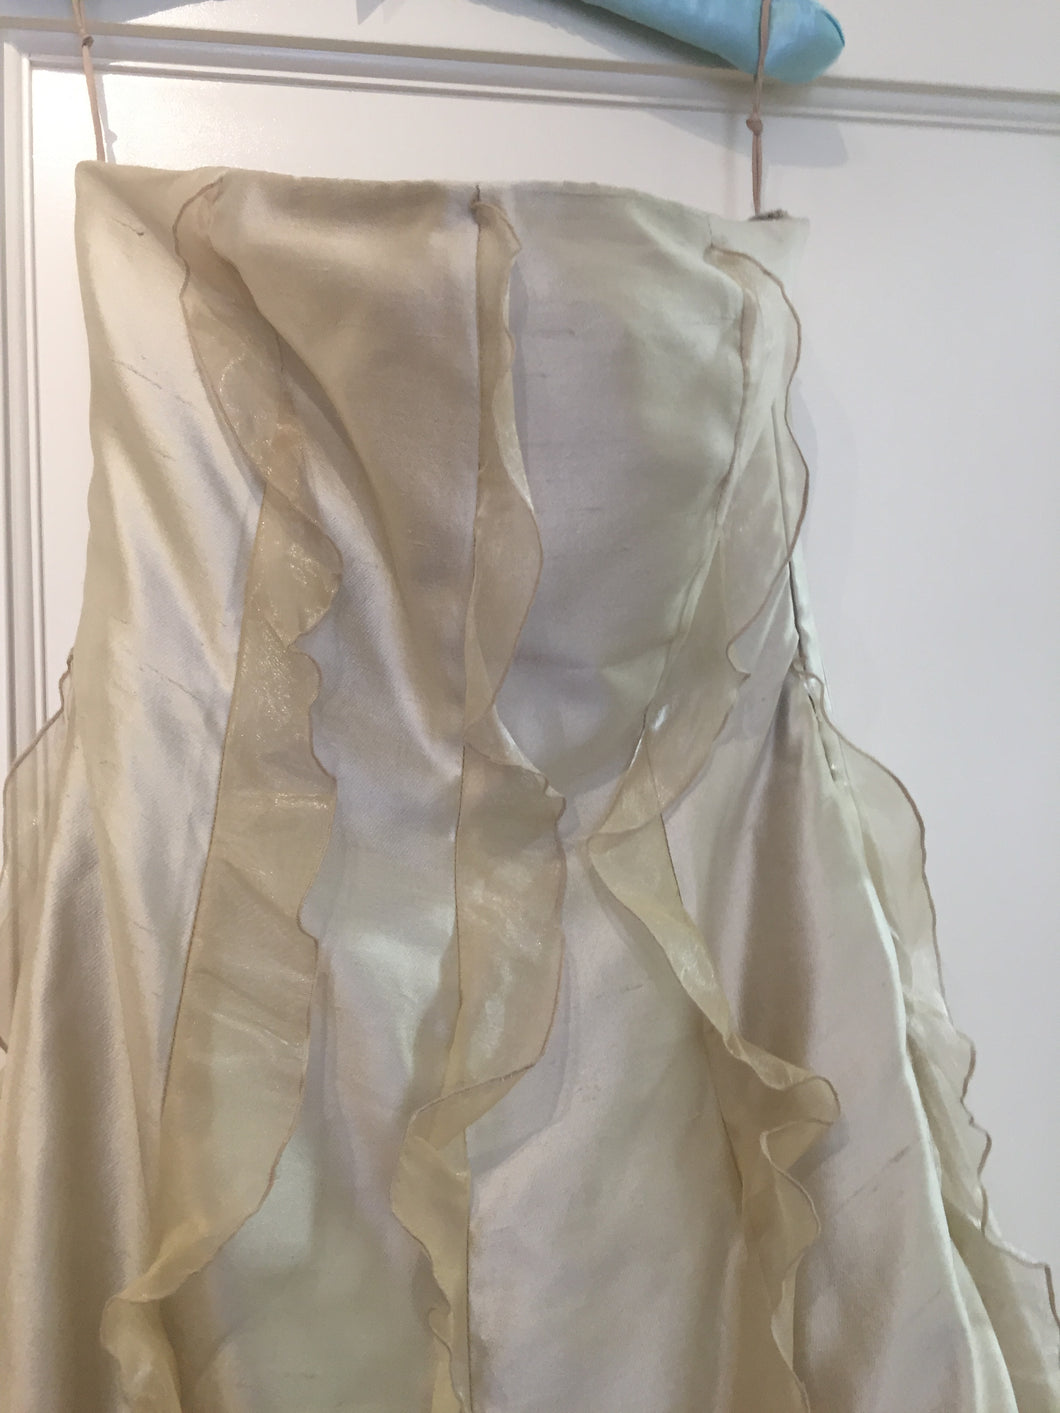 Valentino 'Taffeta  Dress' size 12 used wedding dress front view on hanger